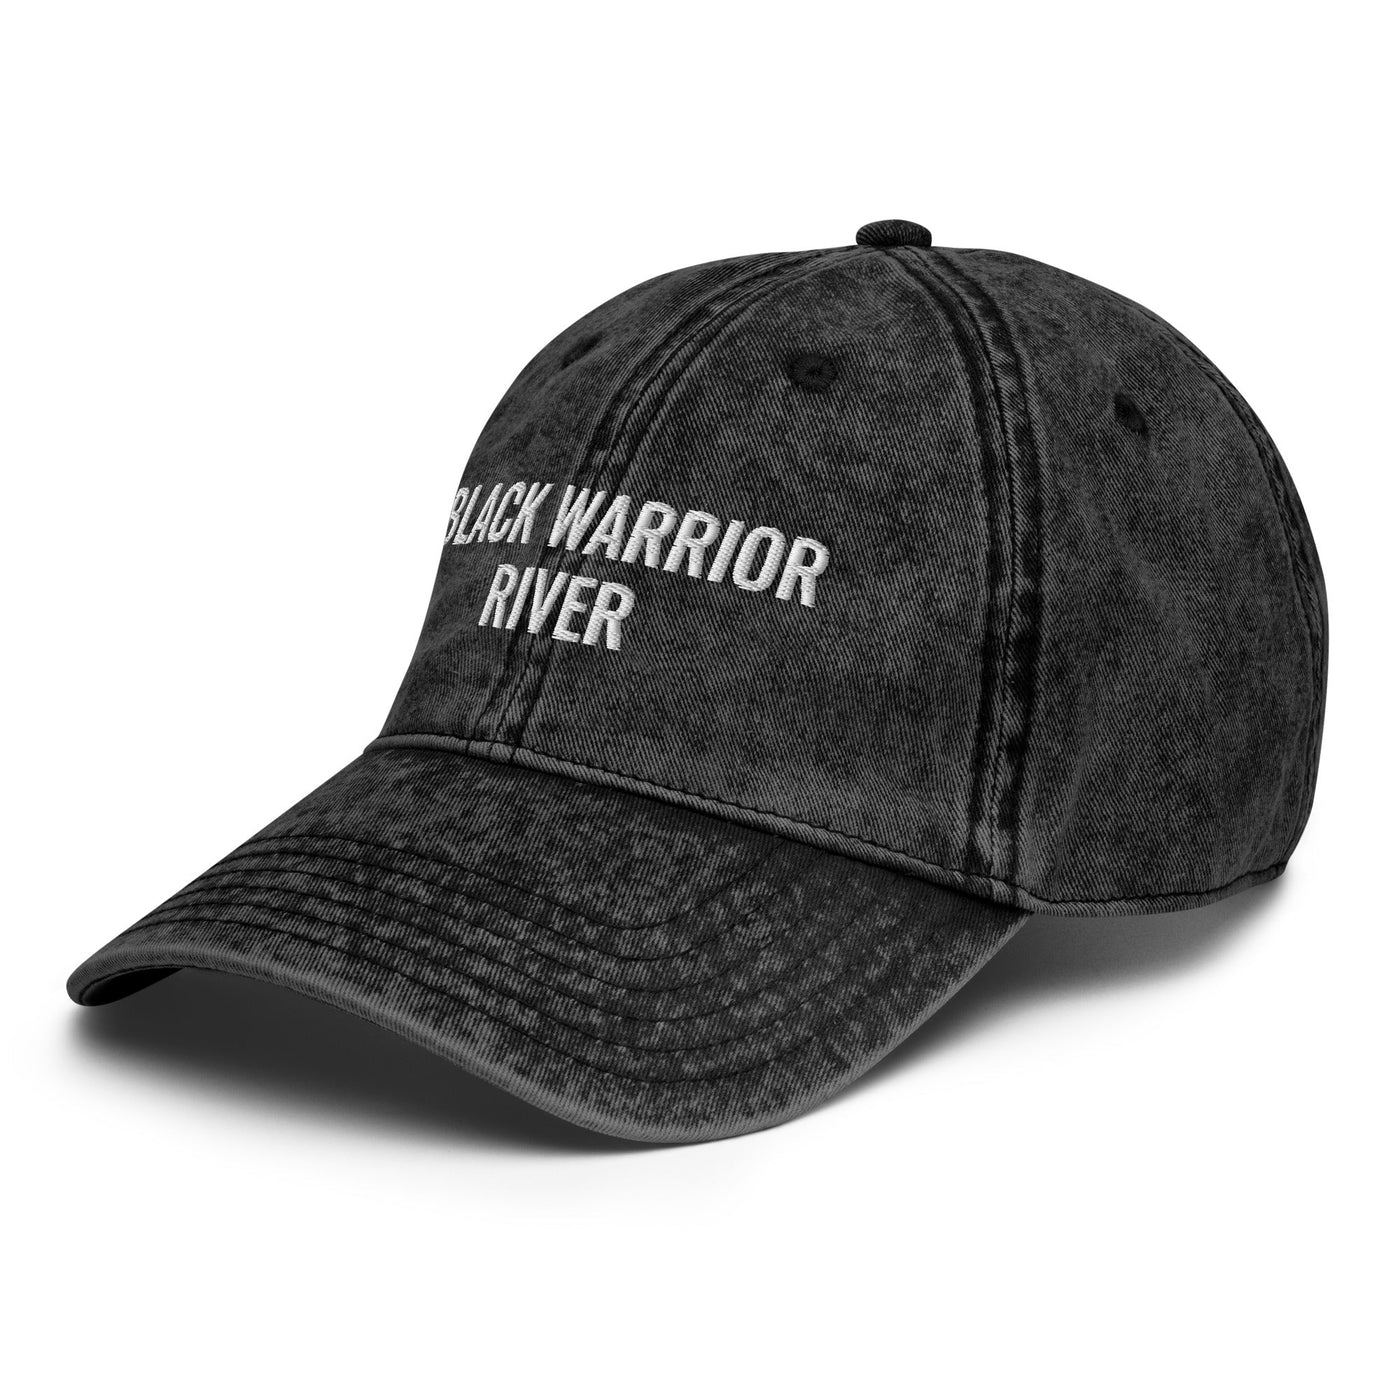 Black Warrior River Hat - Ezra's Clothing